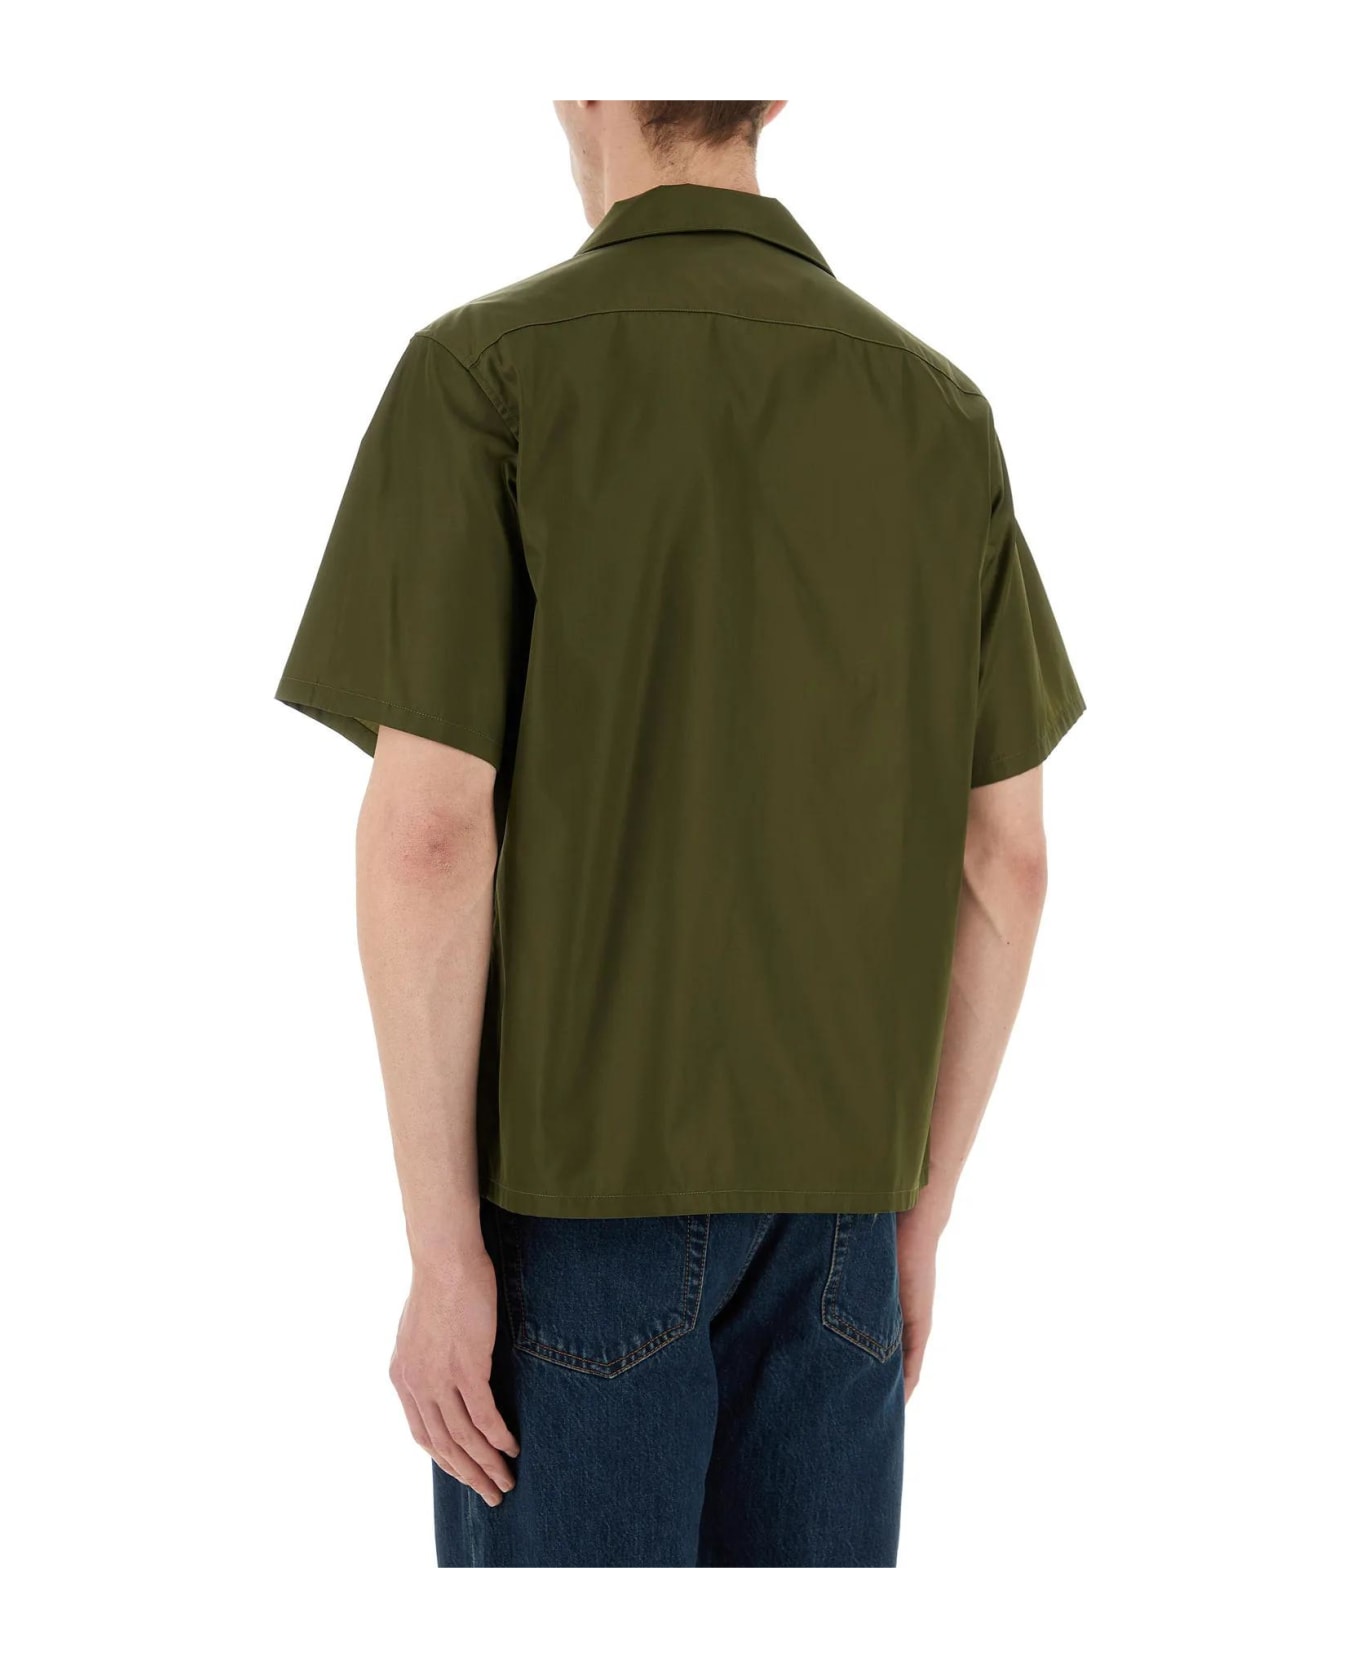 Prada Olive Green Re-nylon Shirt - Loden